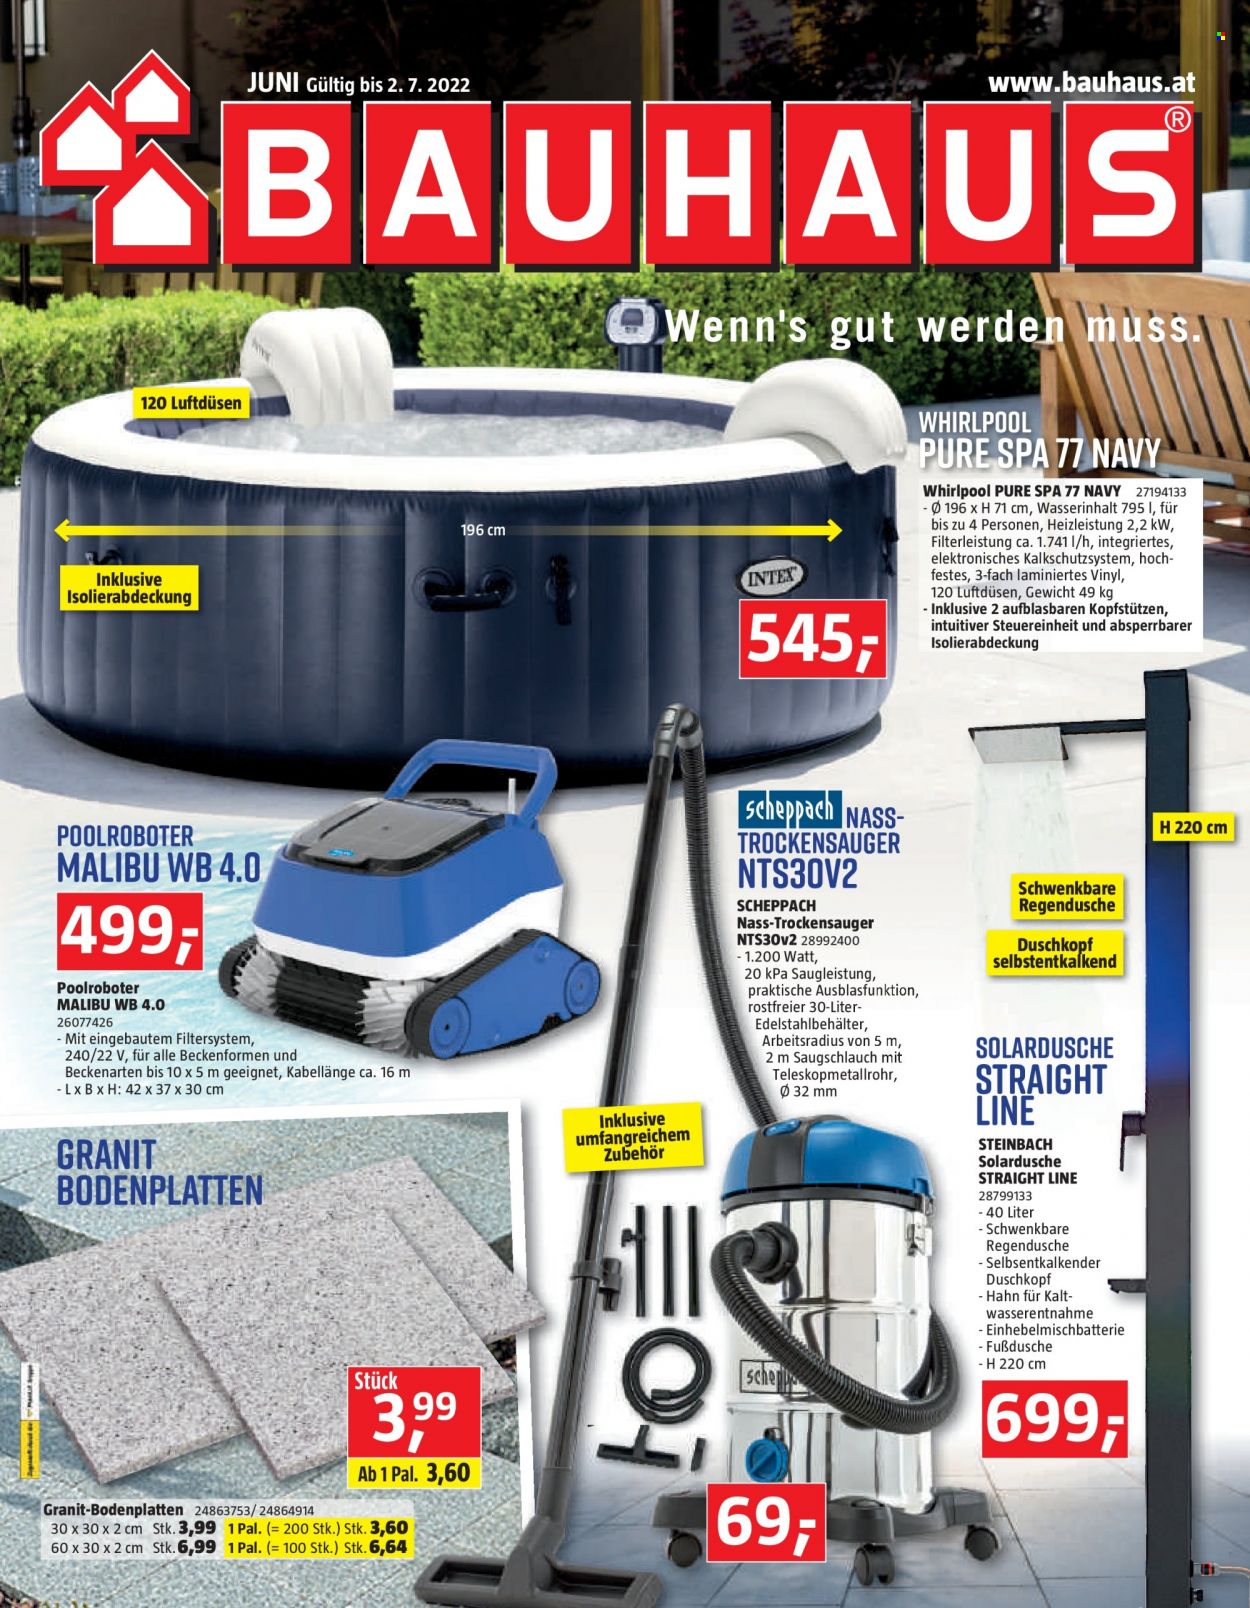 Angebote Bauhaus - 1.6.2022 - 2.7.2022 - Verkaufsprodukte - Trockensauger, bodenplatte, Whirlpool, Gartendusche. Seite 1.